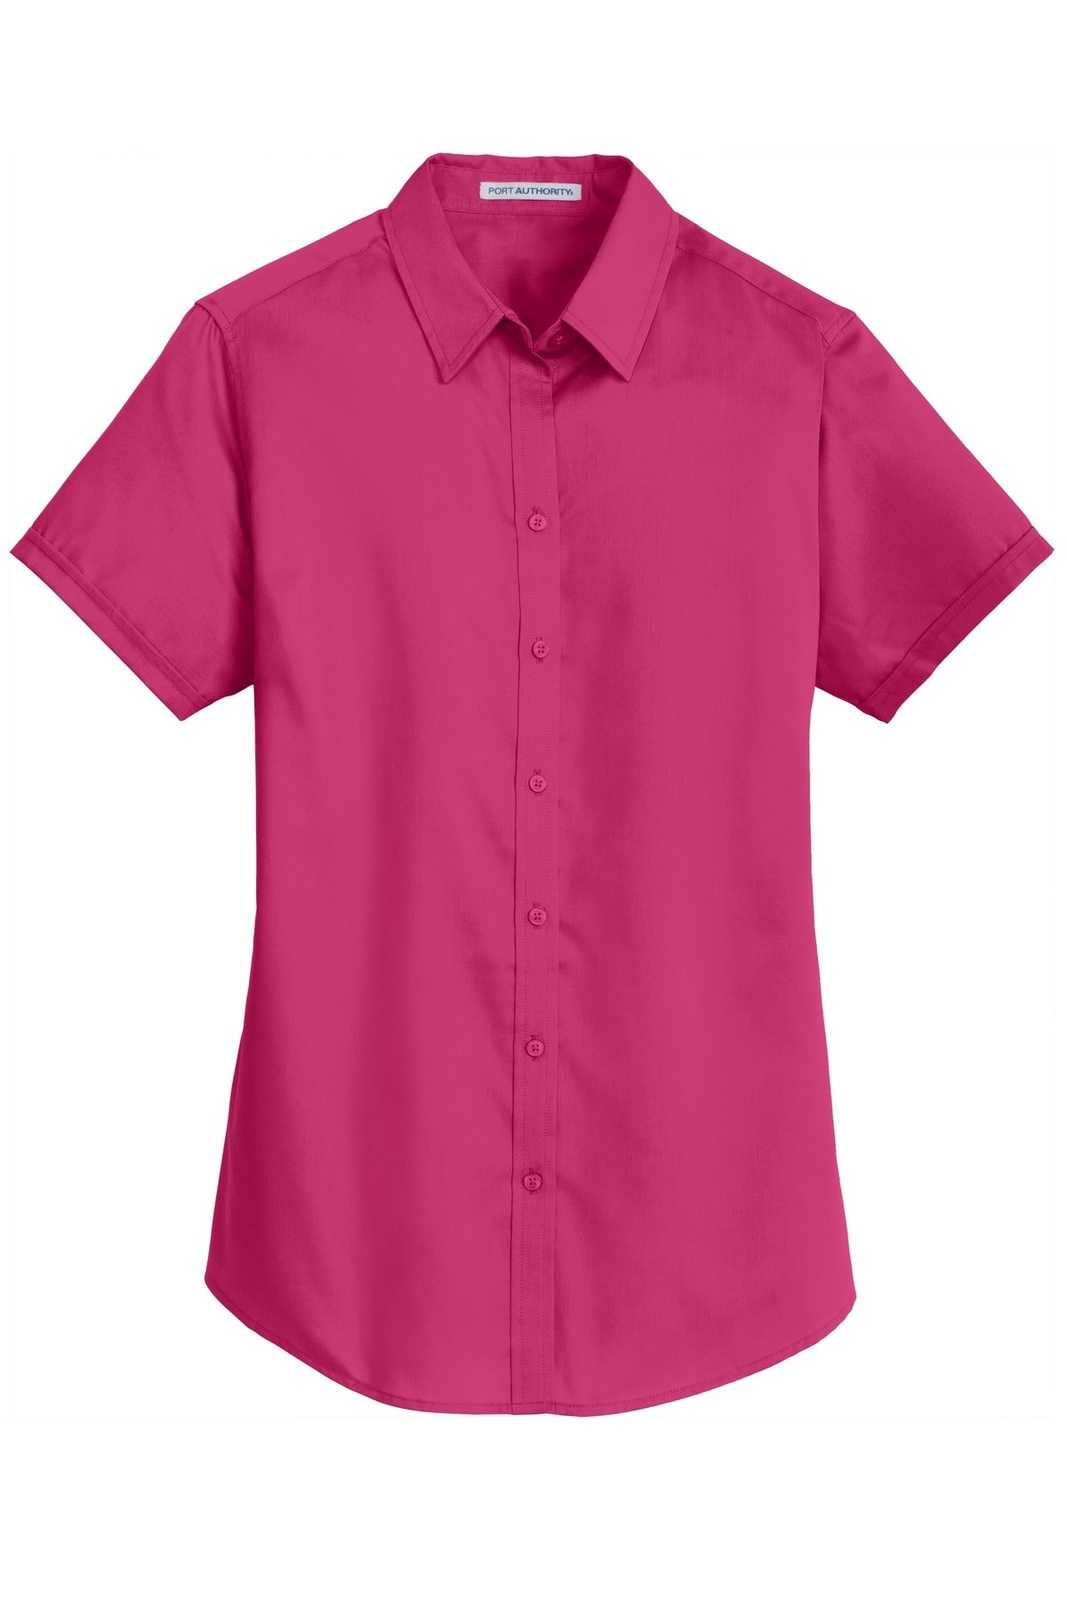 Port Authority L664 Ladies Short Sleeve Superpro Twill Shirt - Pink Azalea - HIT a Double - 5